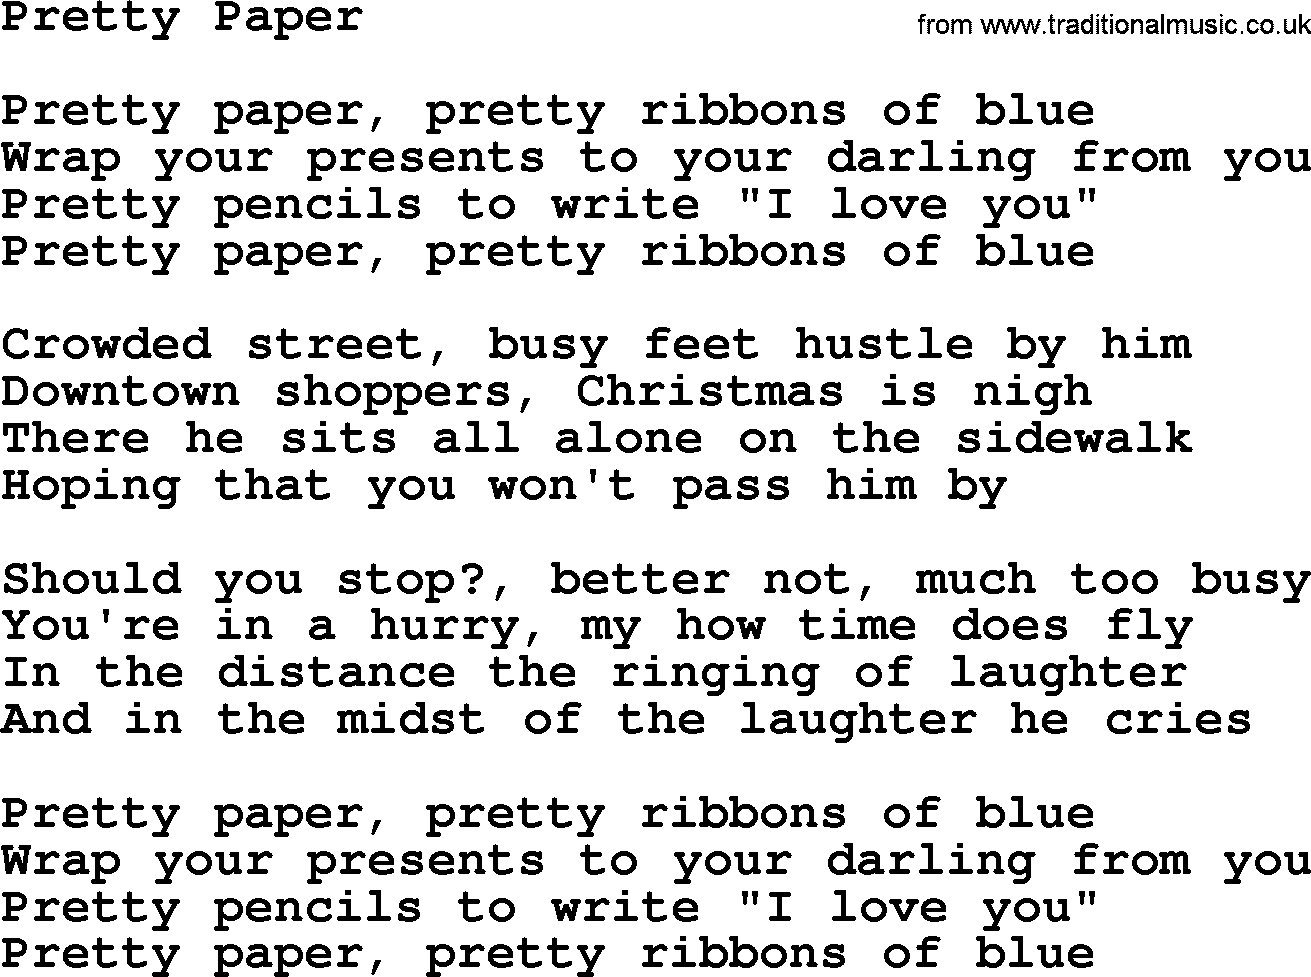 Willie Nelson song: Pretty Paper lyrics